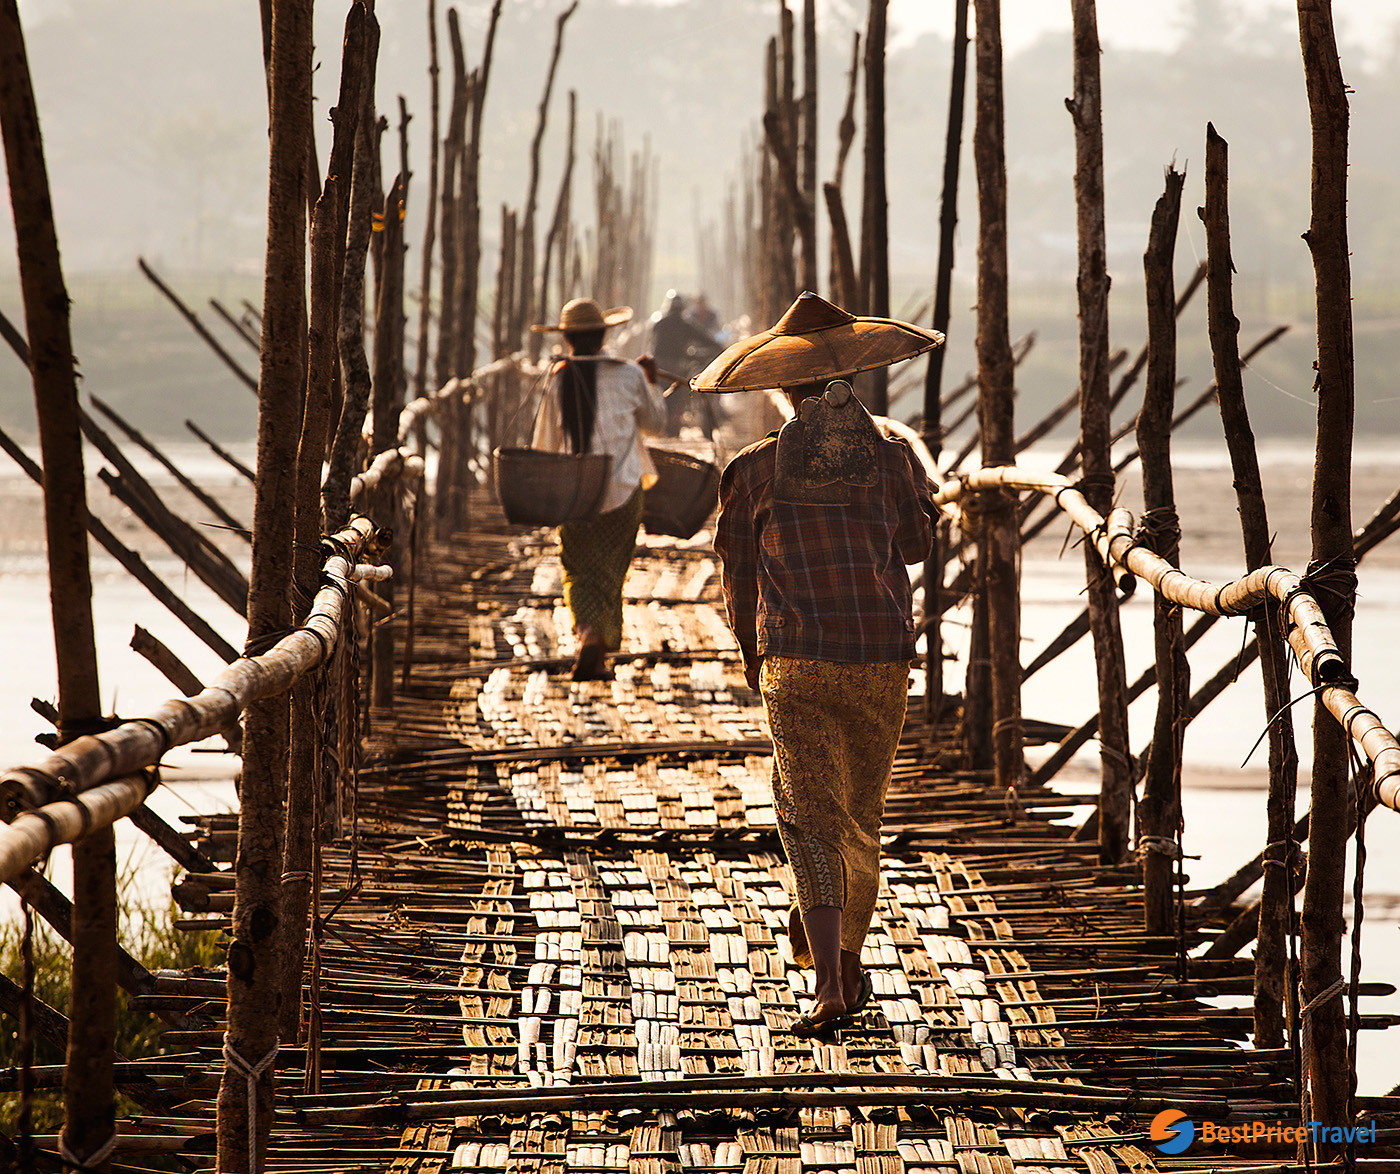 The Bamboo Bridge in Bhamo